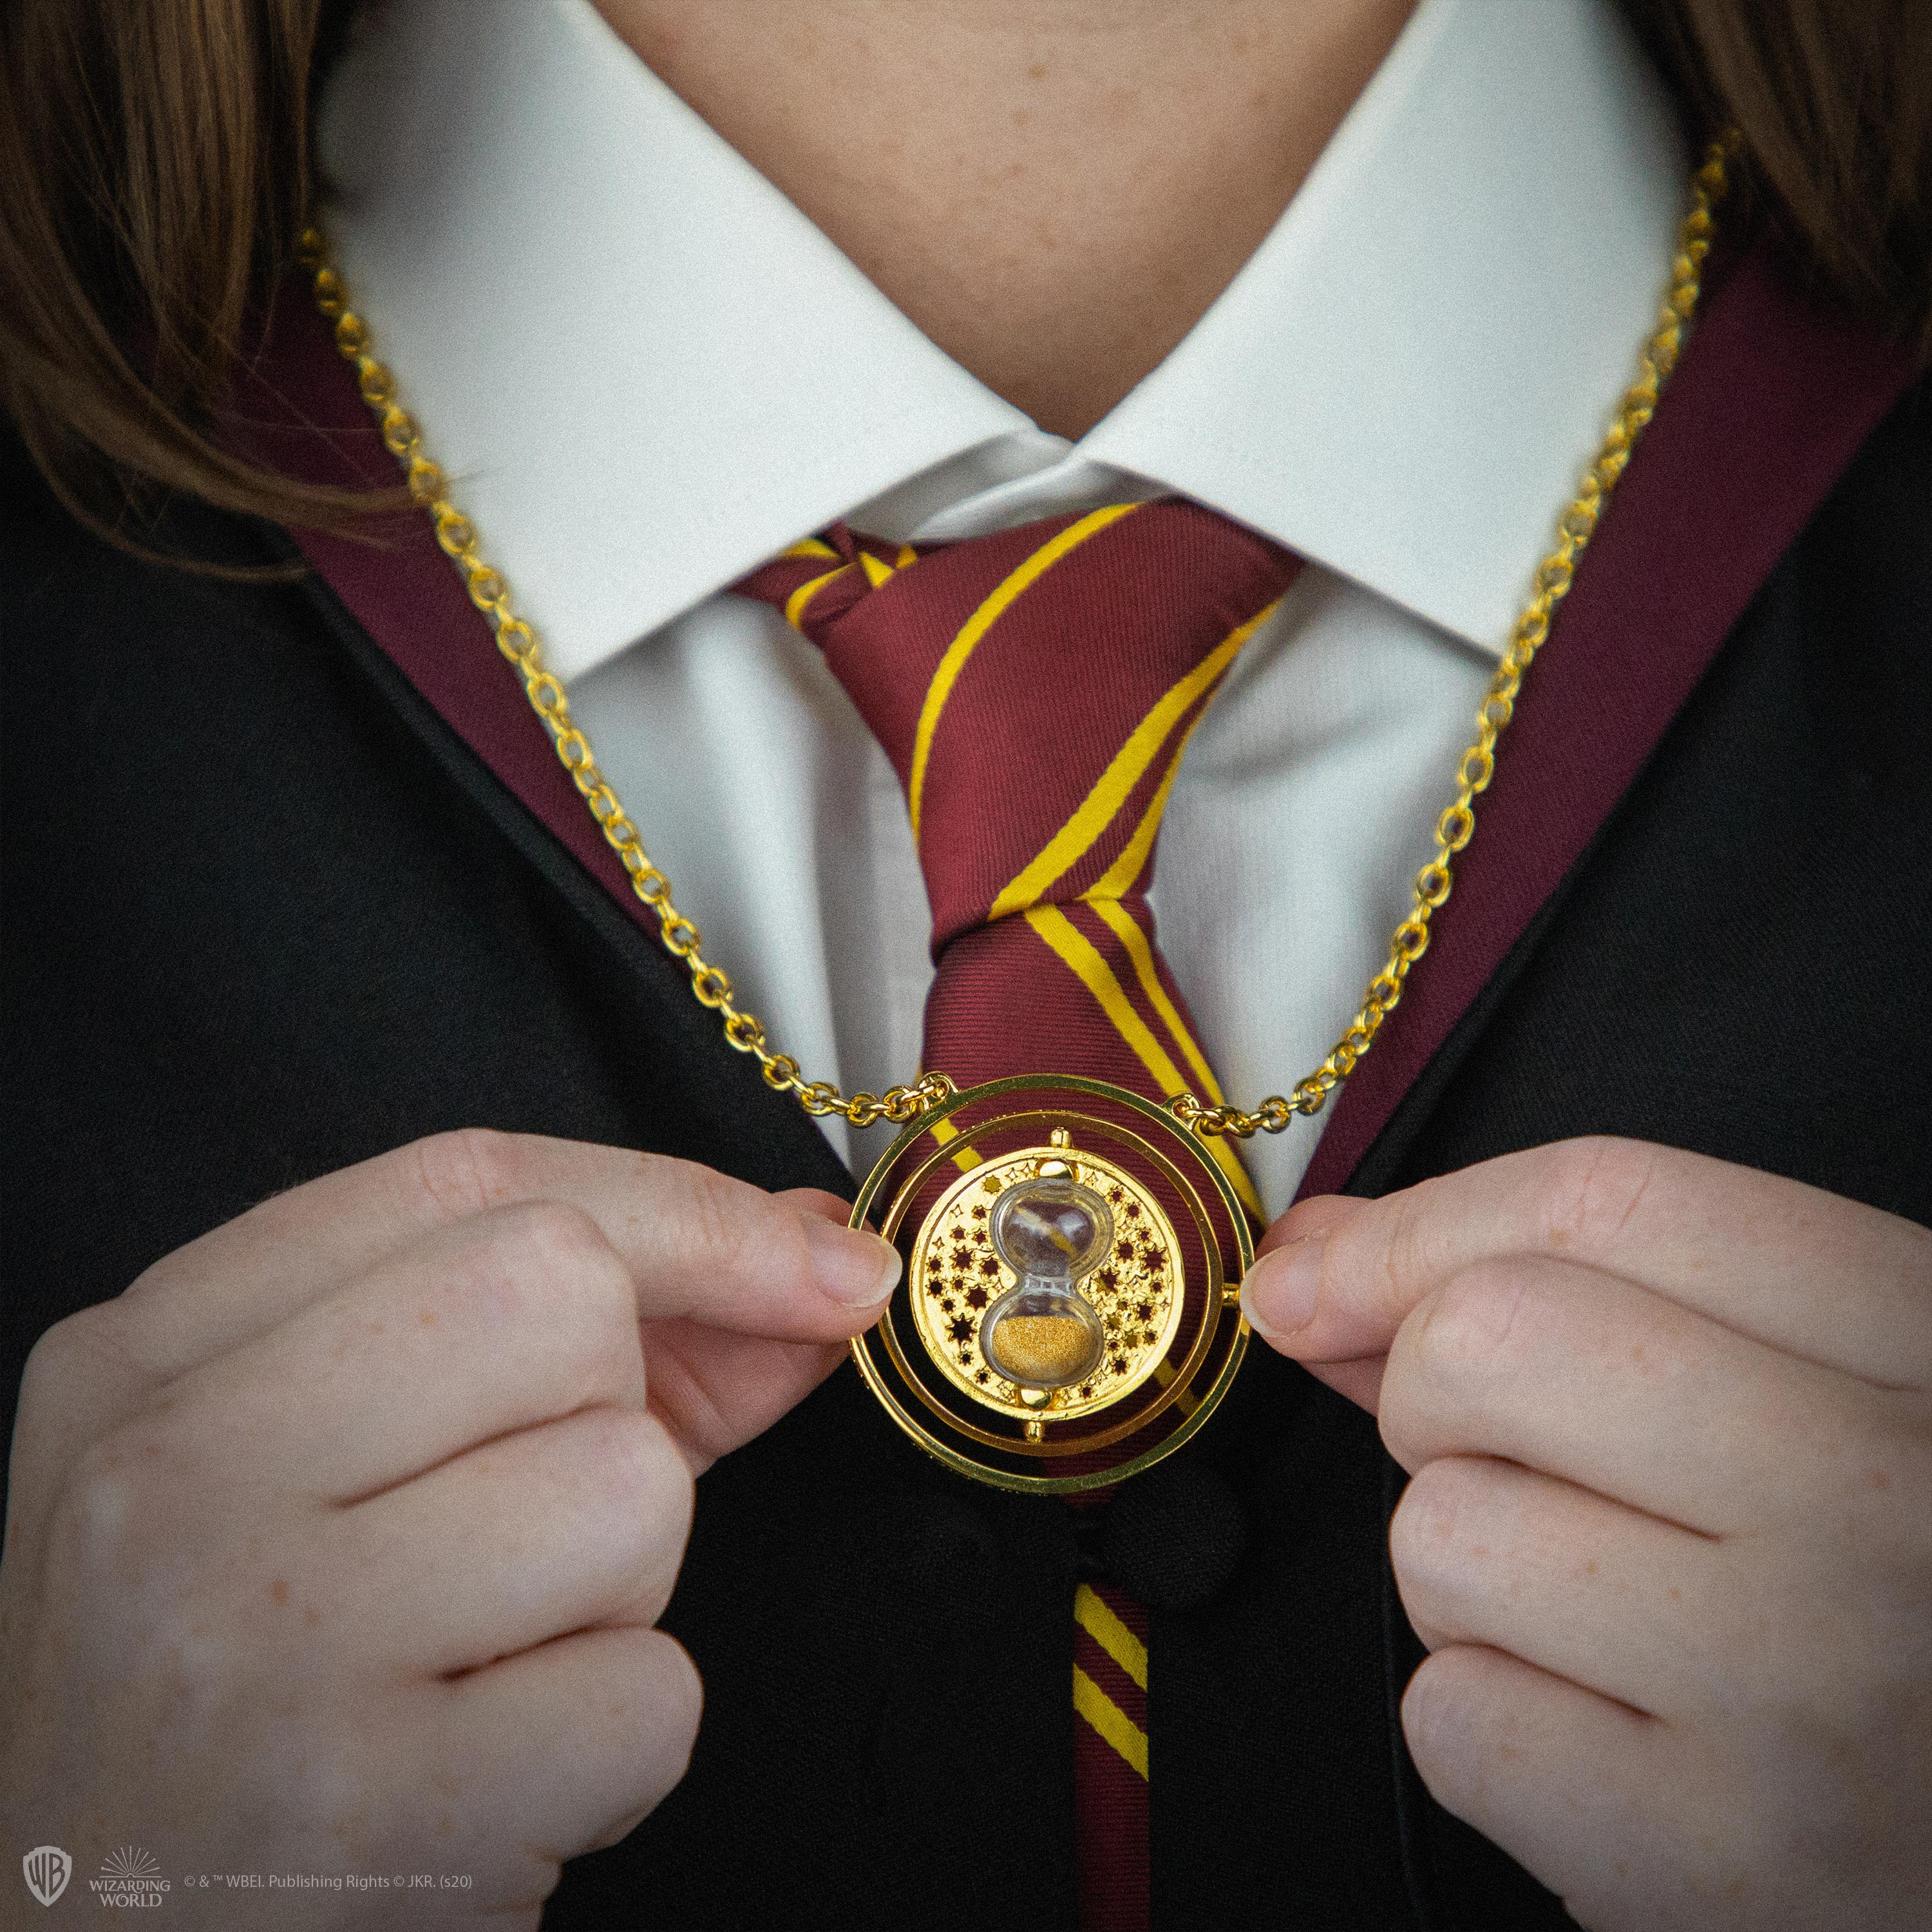 Harry Potter Hermione Granger's time turner necklace | Time turner necklace,  Harry potter hermione granger, Harry potter hermione